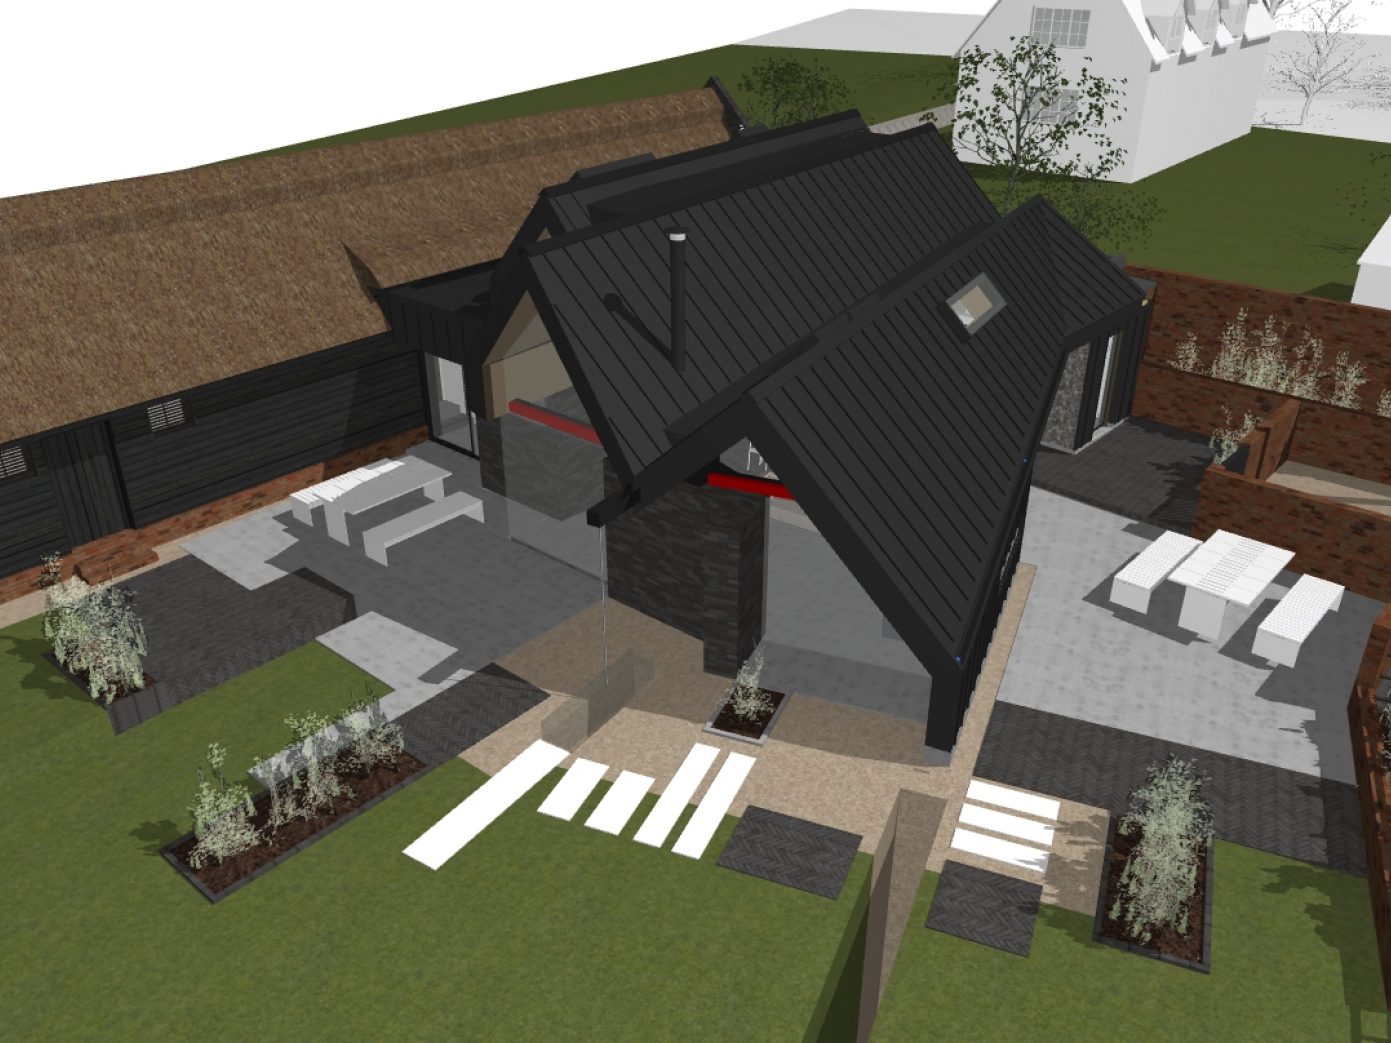 Architecture digital model of zinc roof house | cdc studio cambridge architects